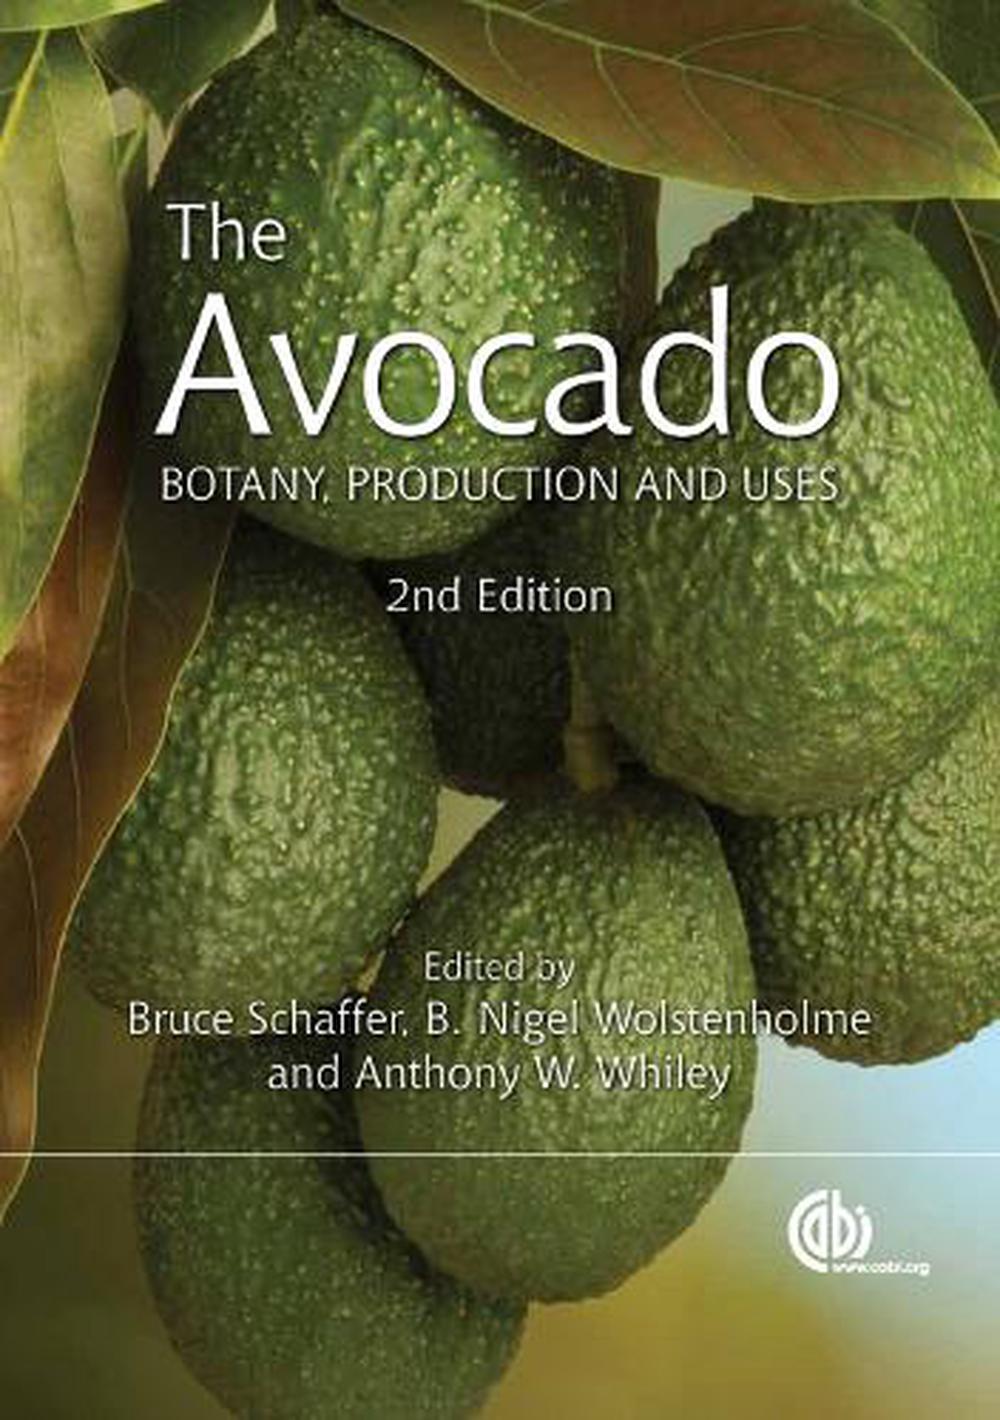 the dud avocado book